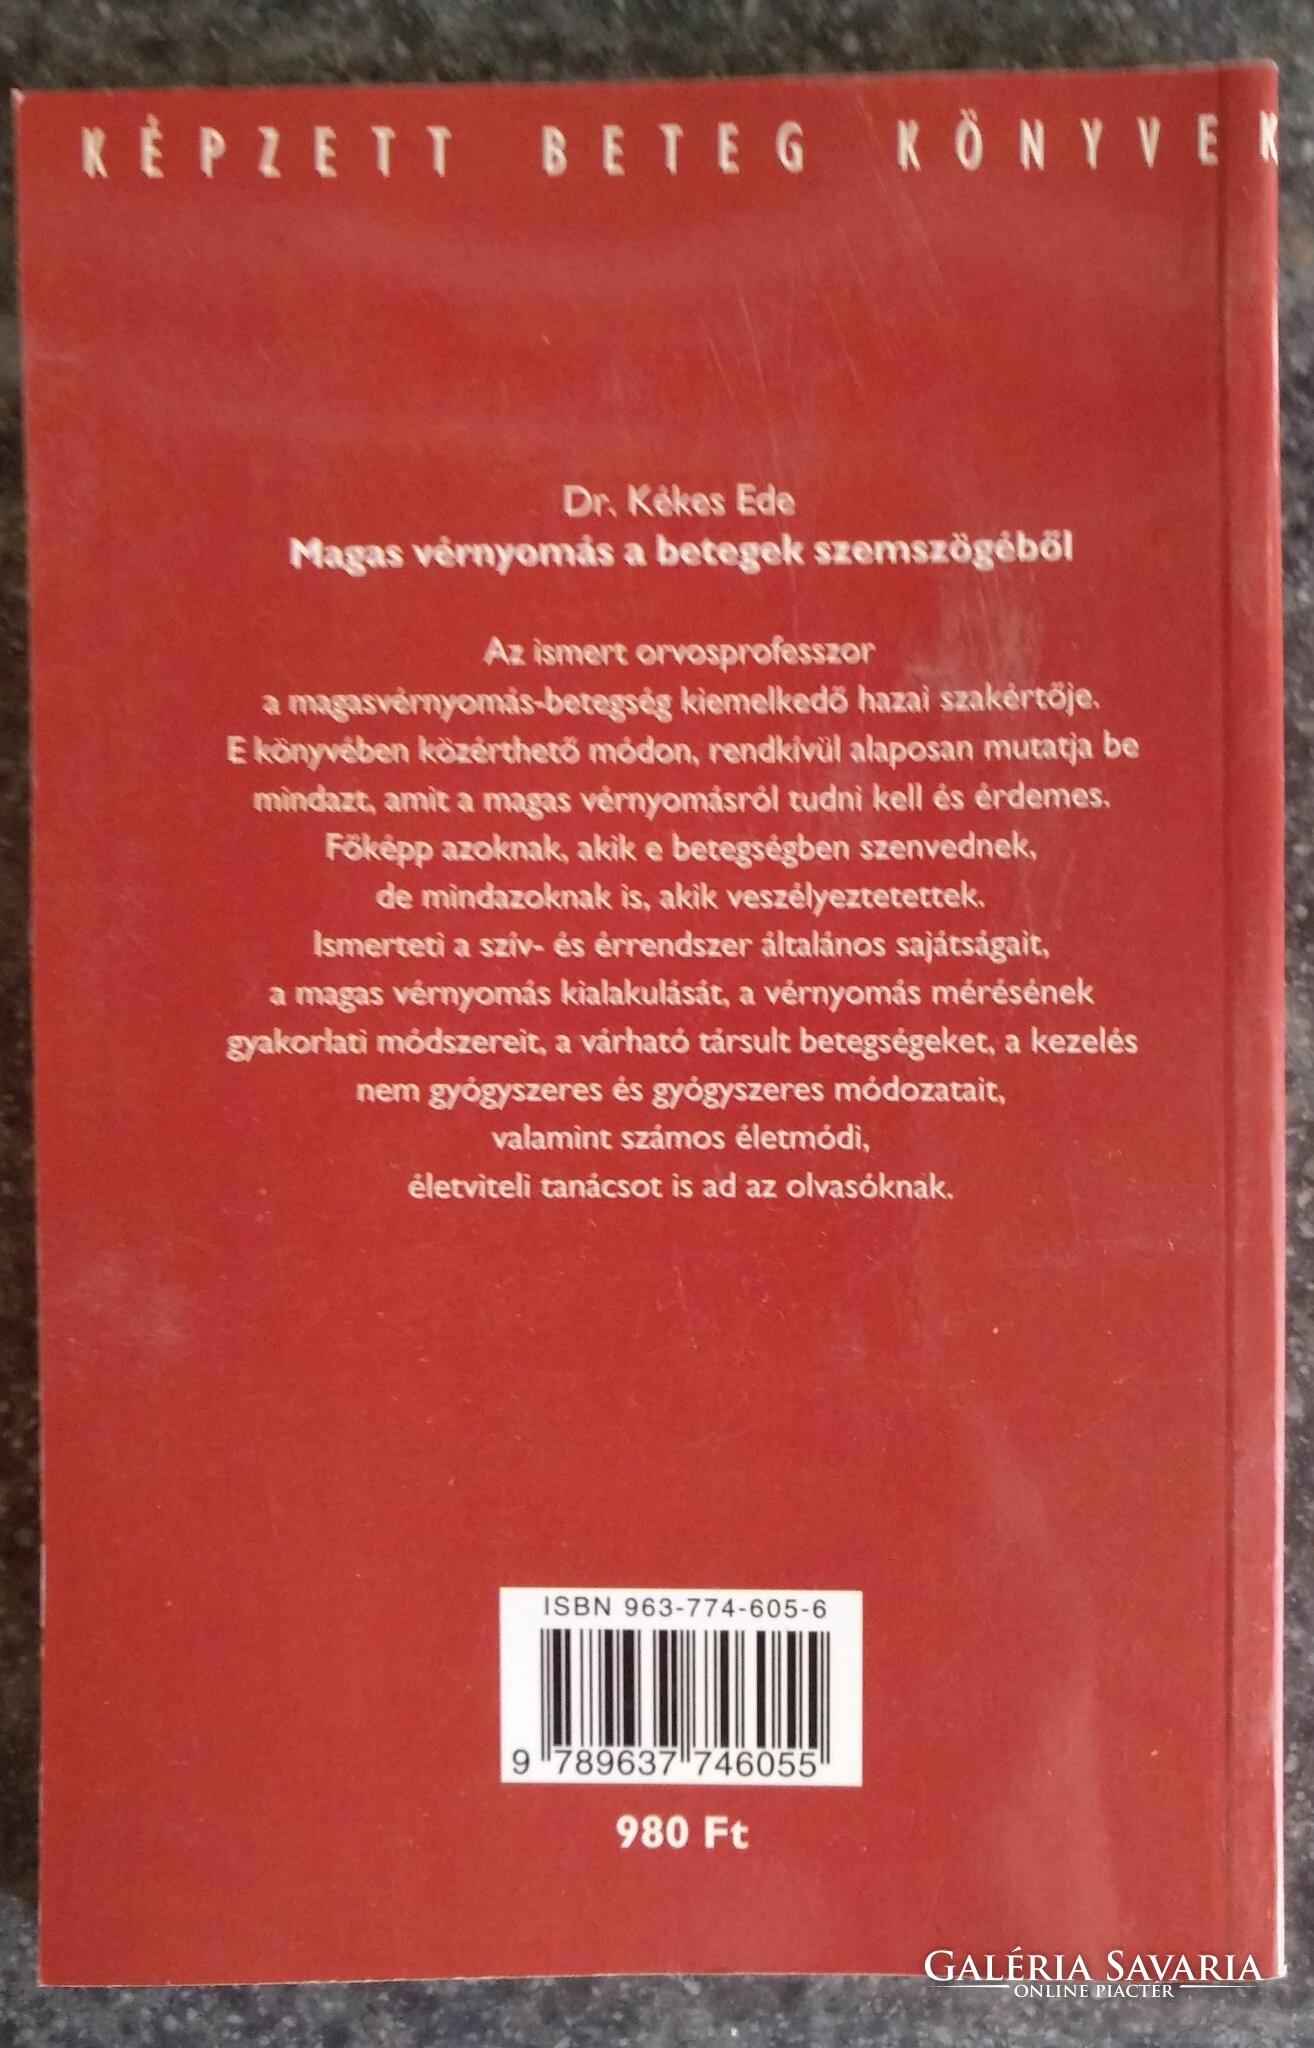 Könyv: Dr. Barna István: Magas vérnyomás - Hernádi Antikvárium - Online antikvárium